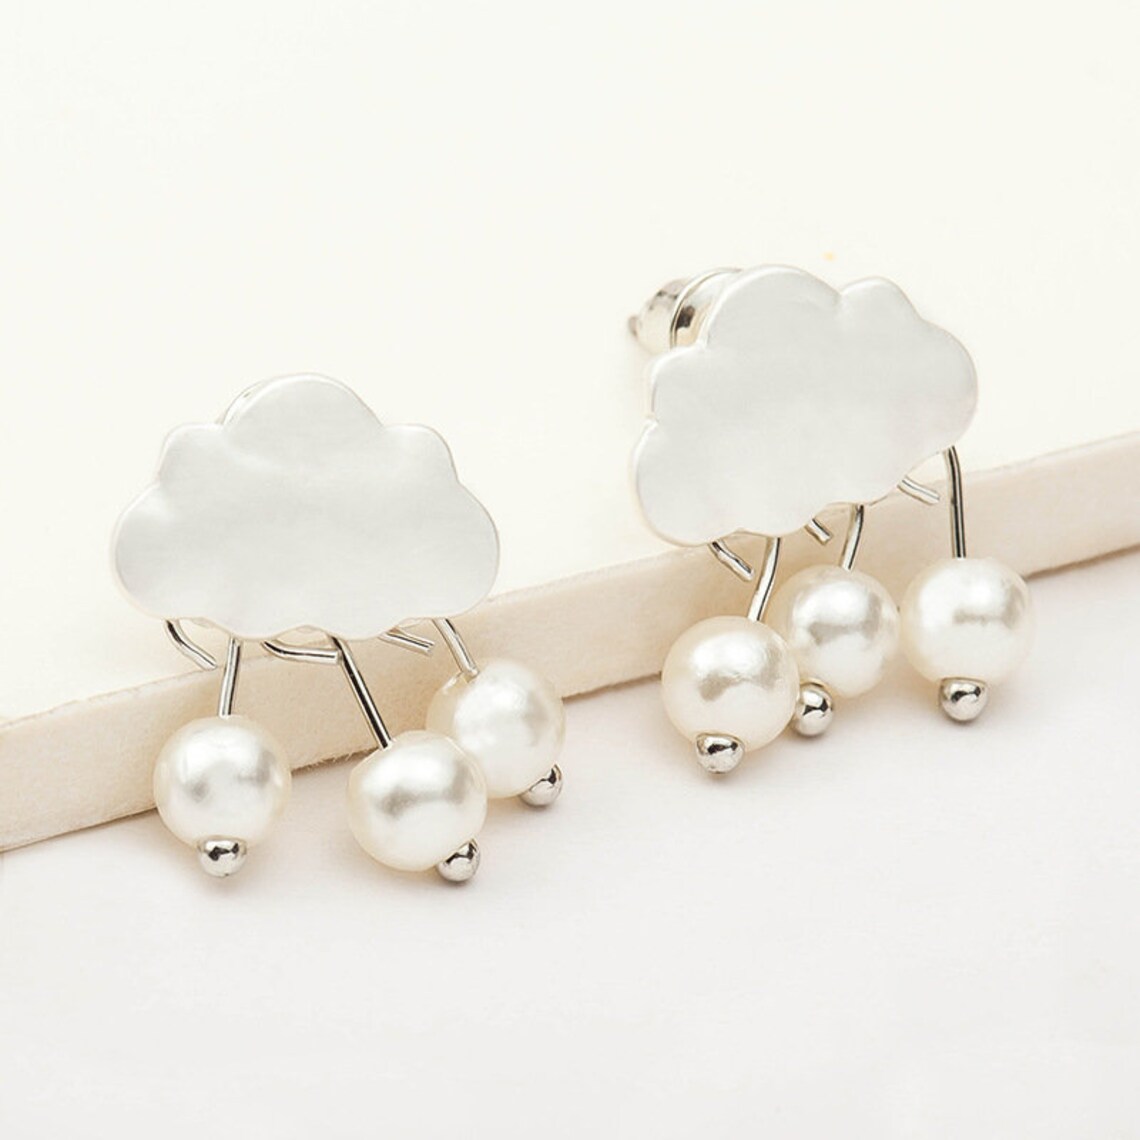 Cloud earrings Mini acrylic Rainy Clouds Cute Earring Cute | Etsy